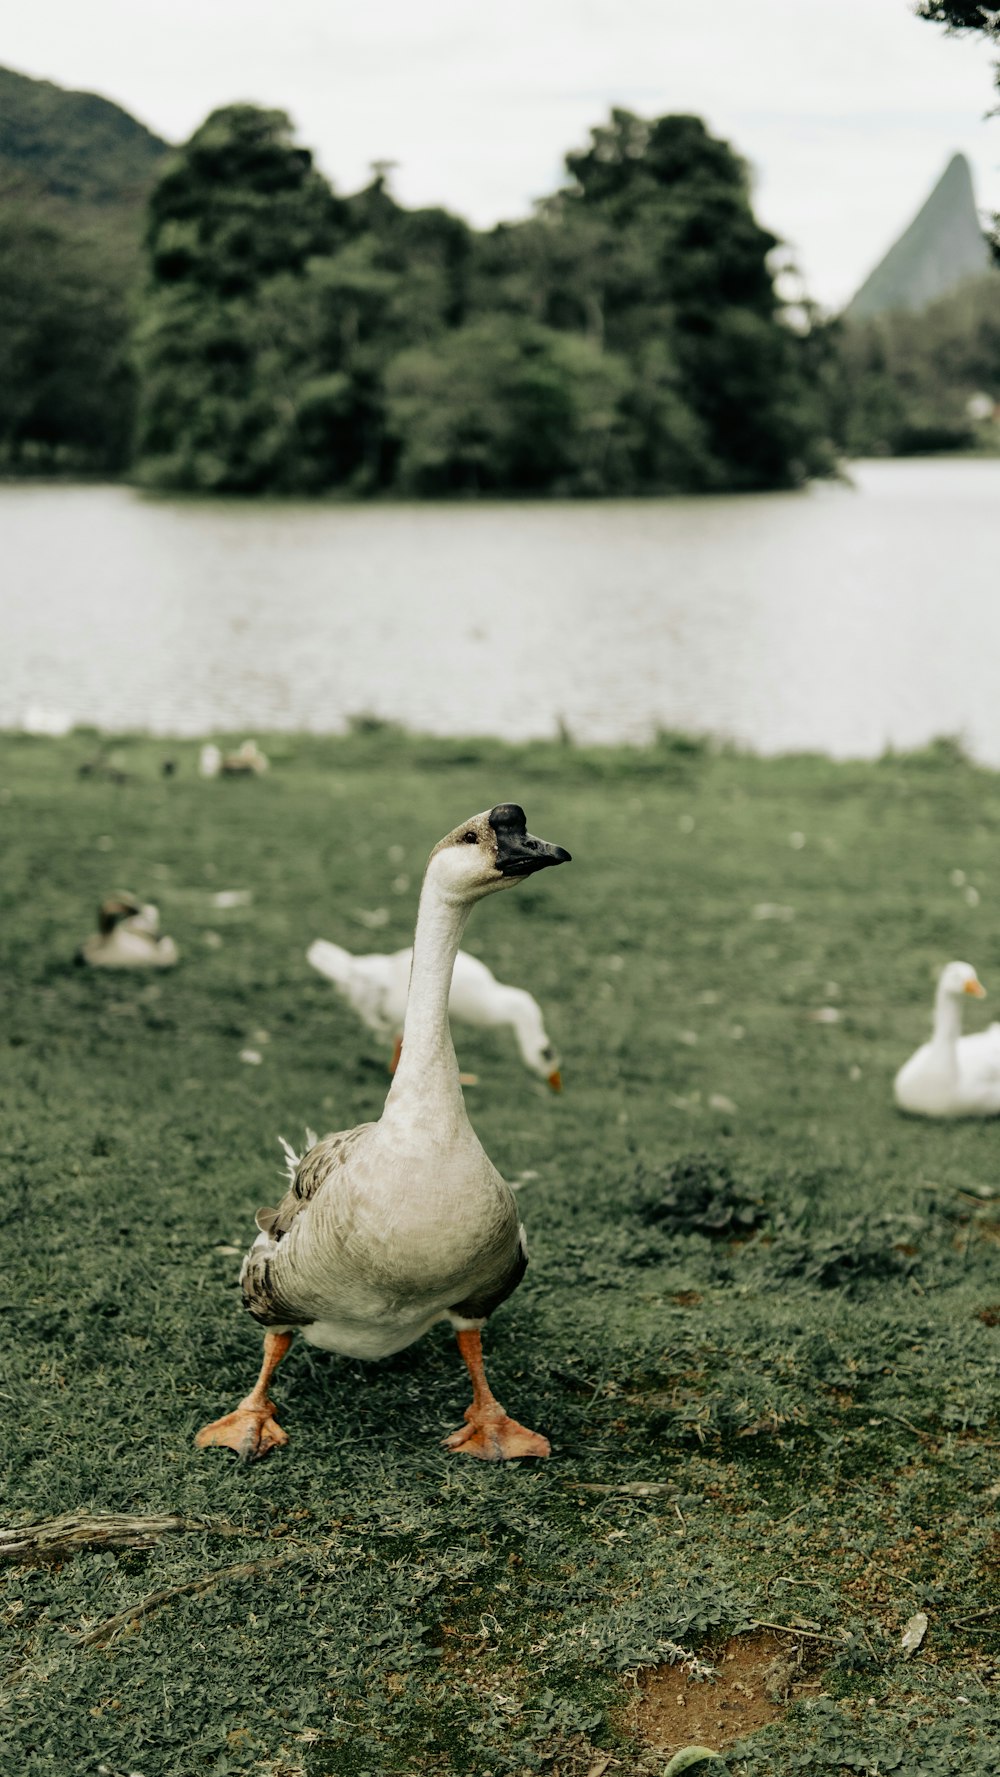 a duck walking on the grass near a lake